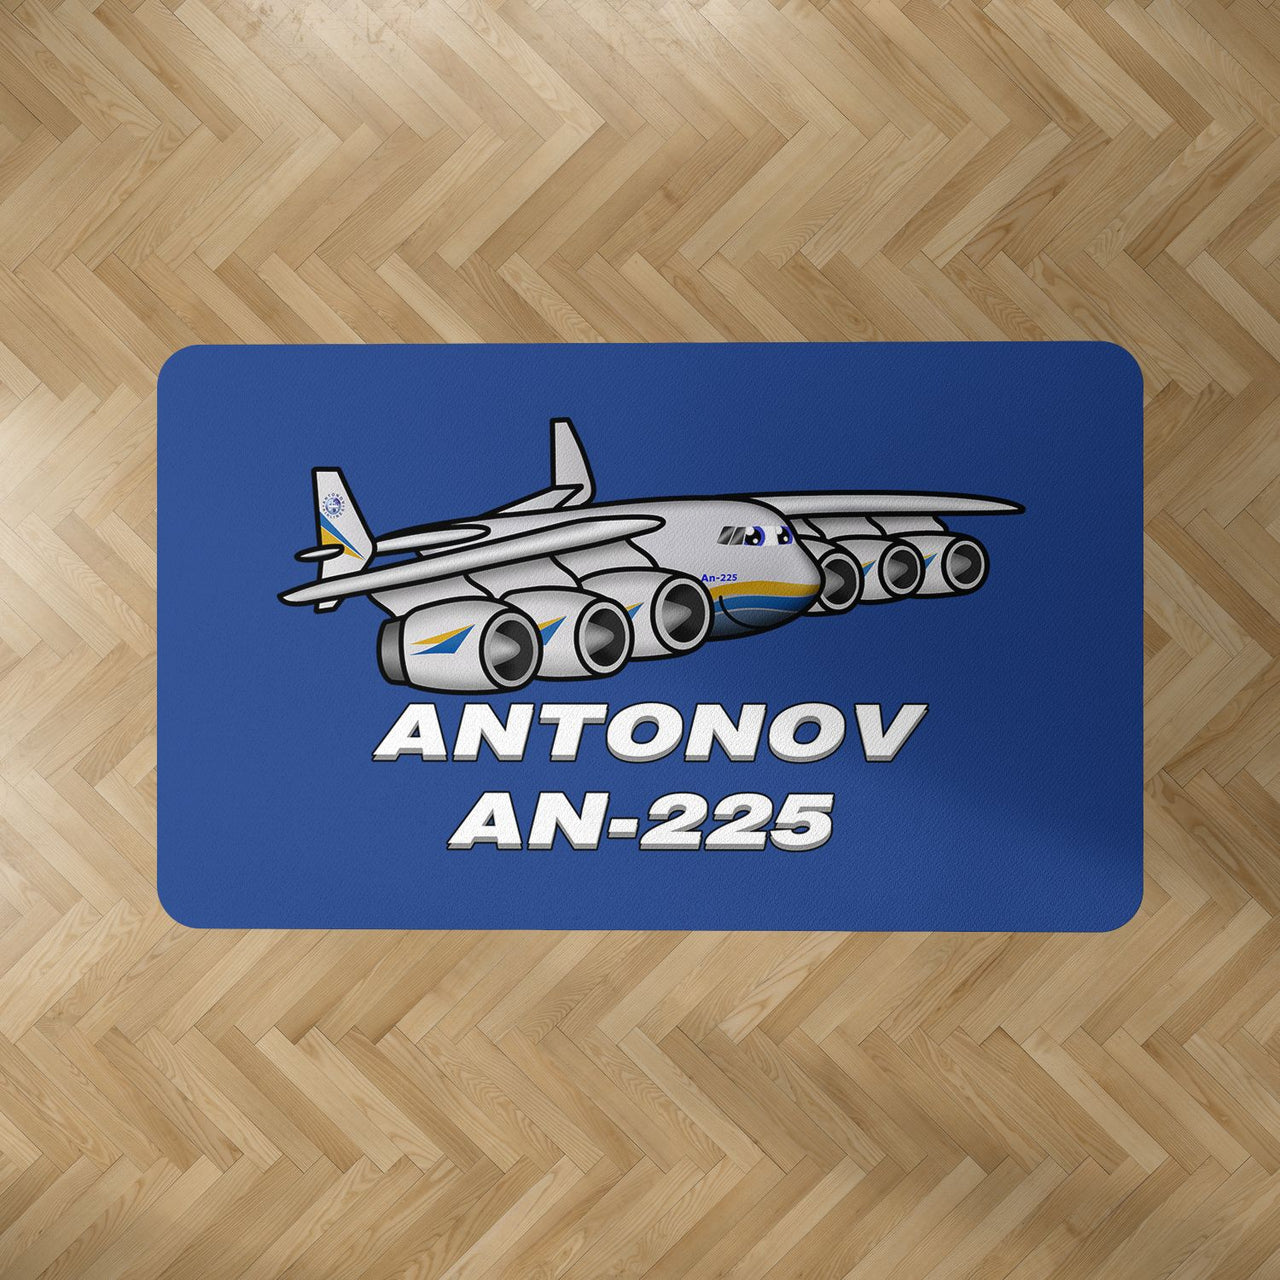 Antonov AN-225 (25) Designed Carpet & Floor Mats